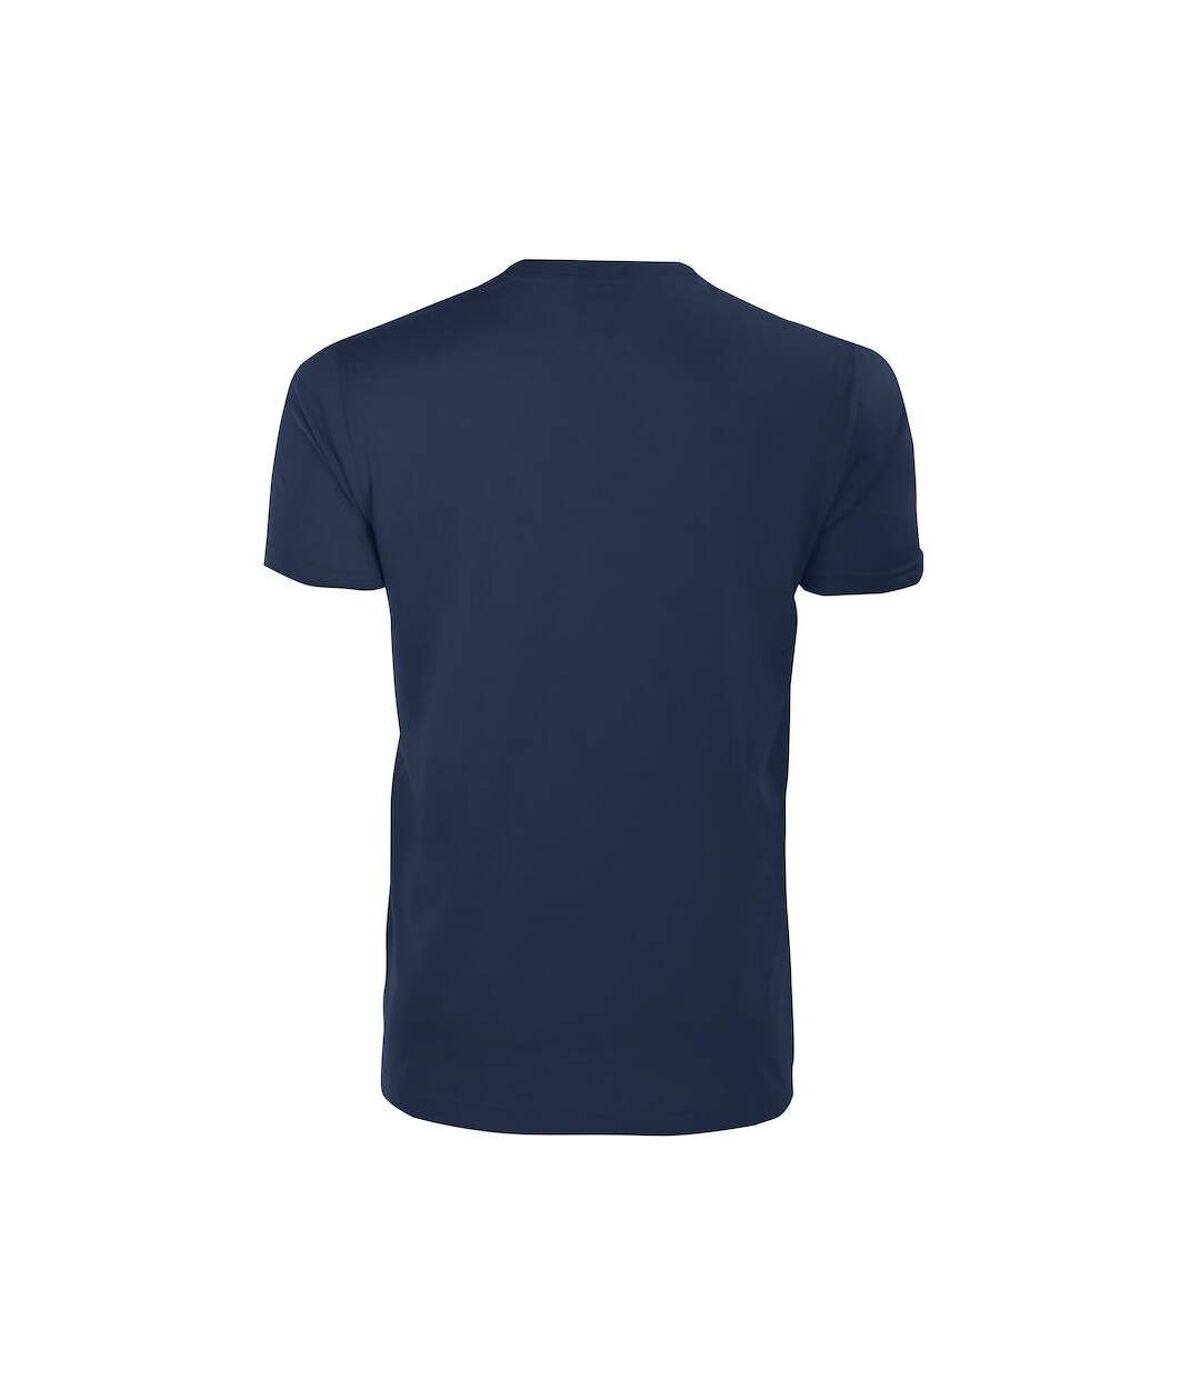 Projob Mens T-Shirt (Navy)